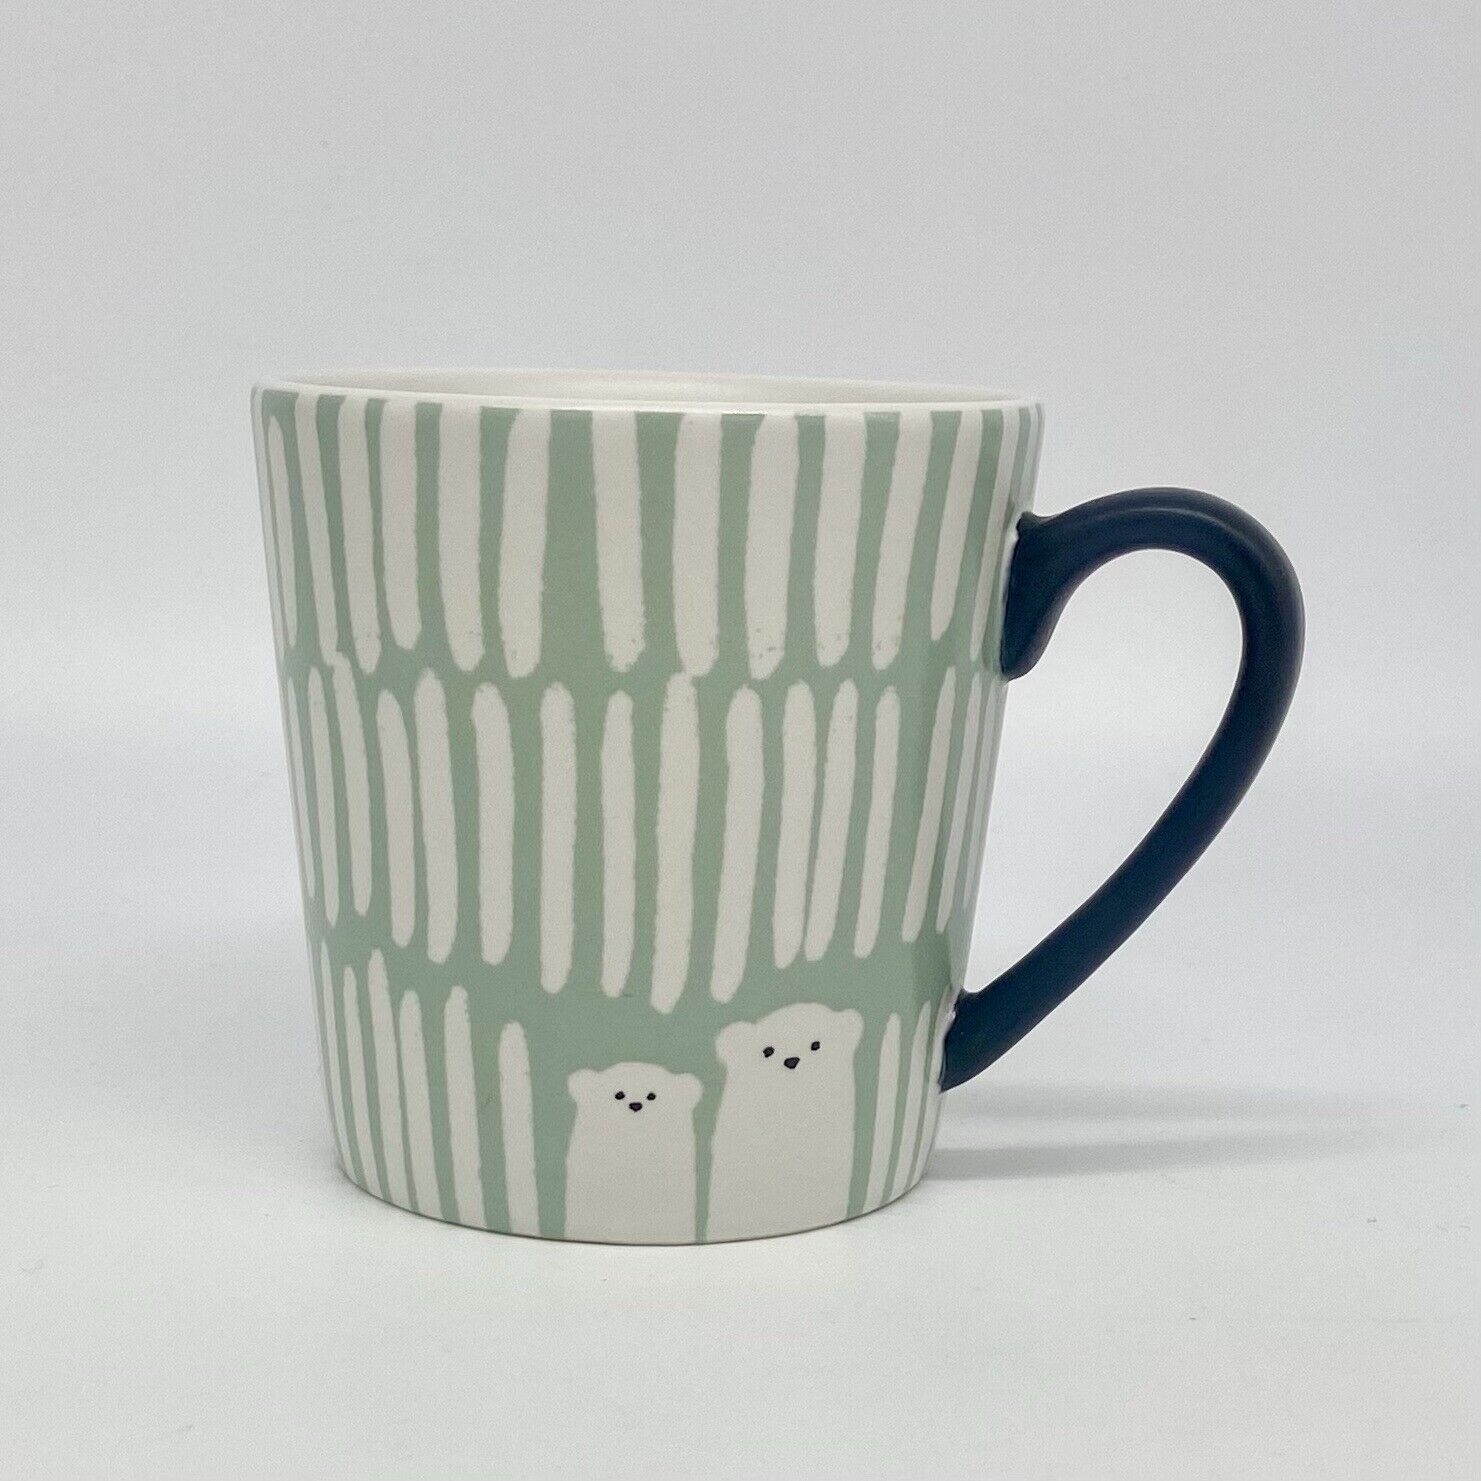 Starbucks 2016 Polar Bear Coffee Mug Green White Black 6oz Small Espresso Cup